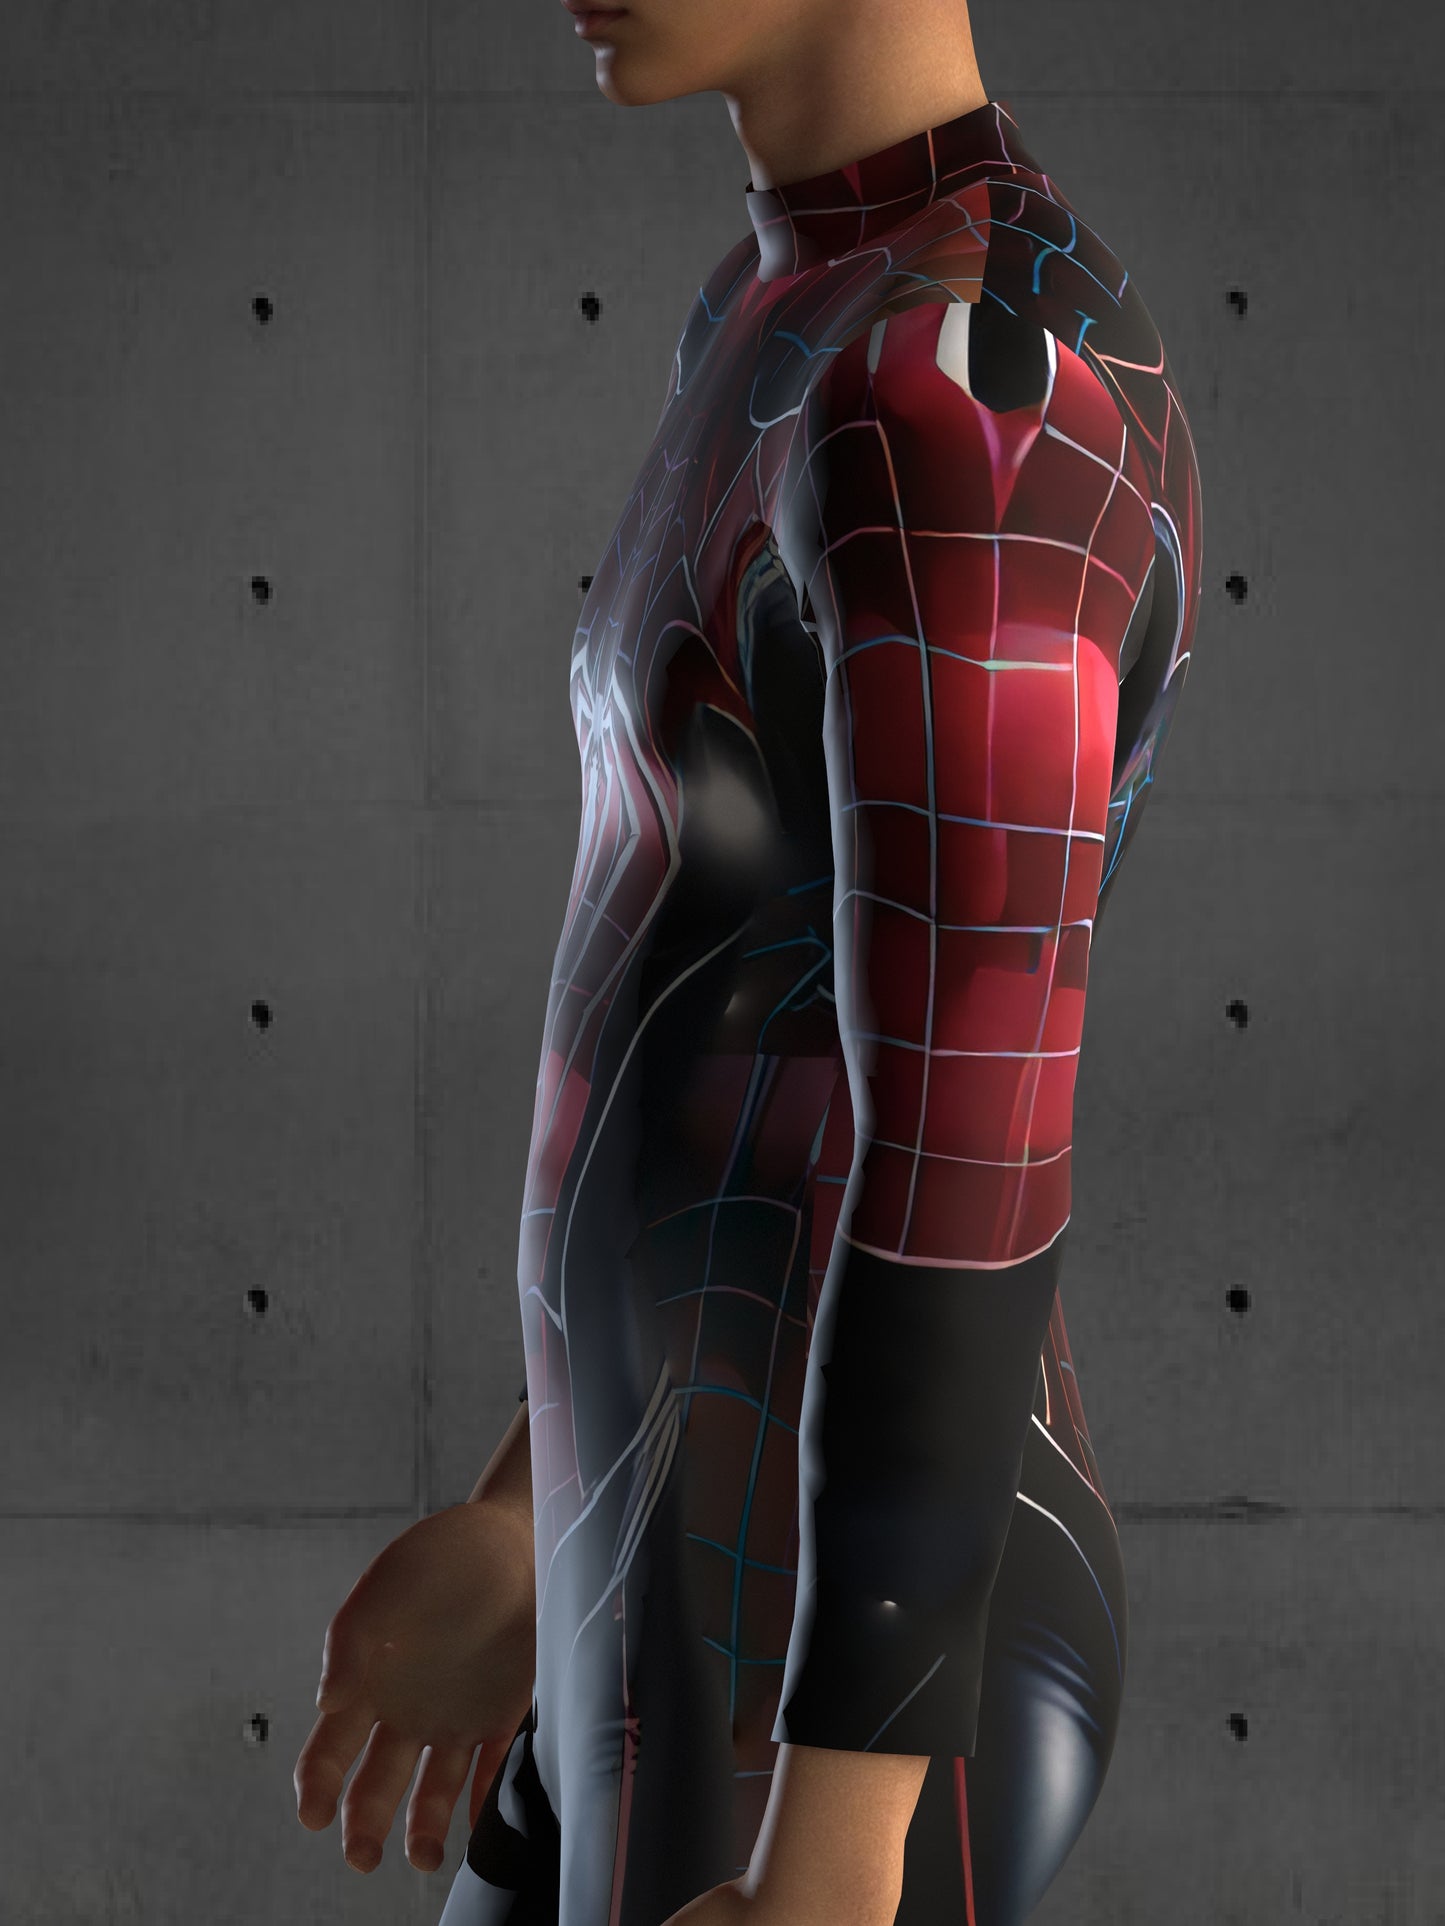 A36M Spider Universe Costume for Men, Black, Custom Fit Available, Futuristic Superhero Cosplay, Halloween Costume